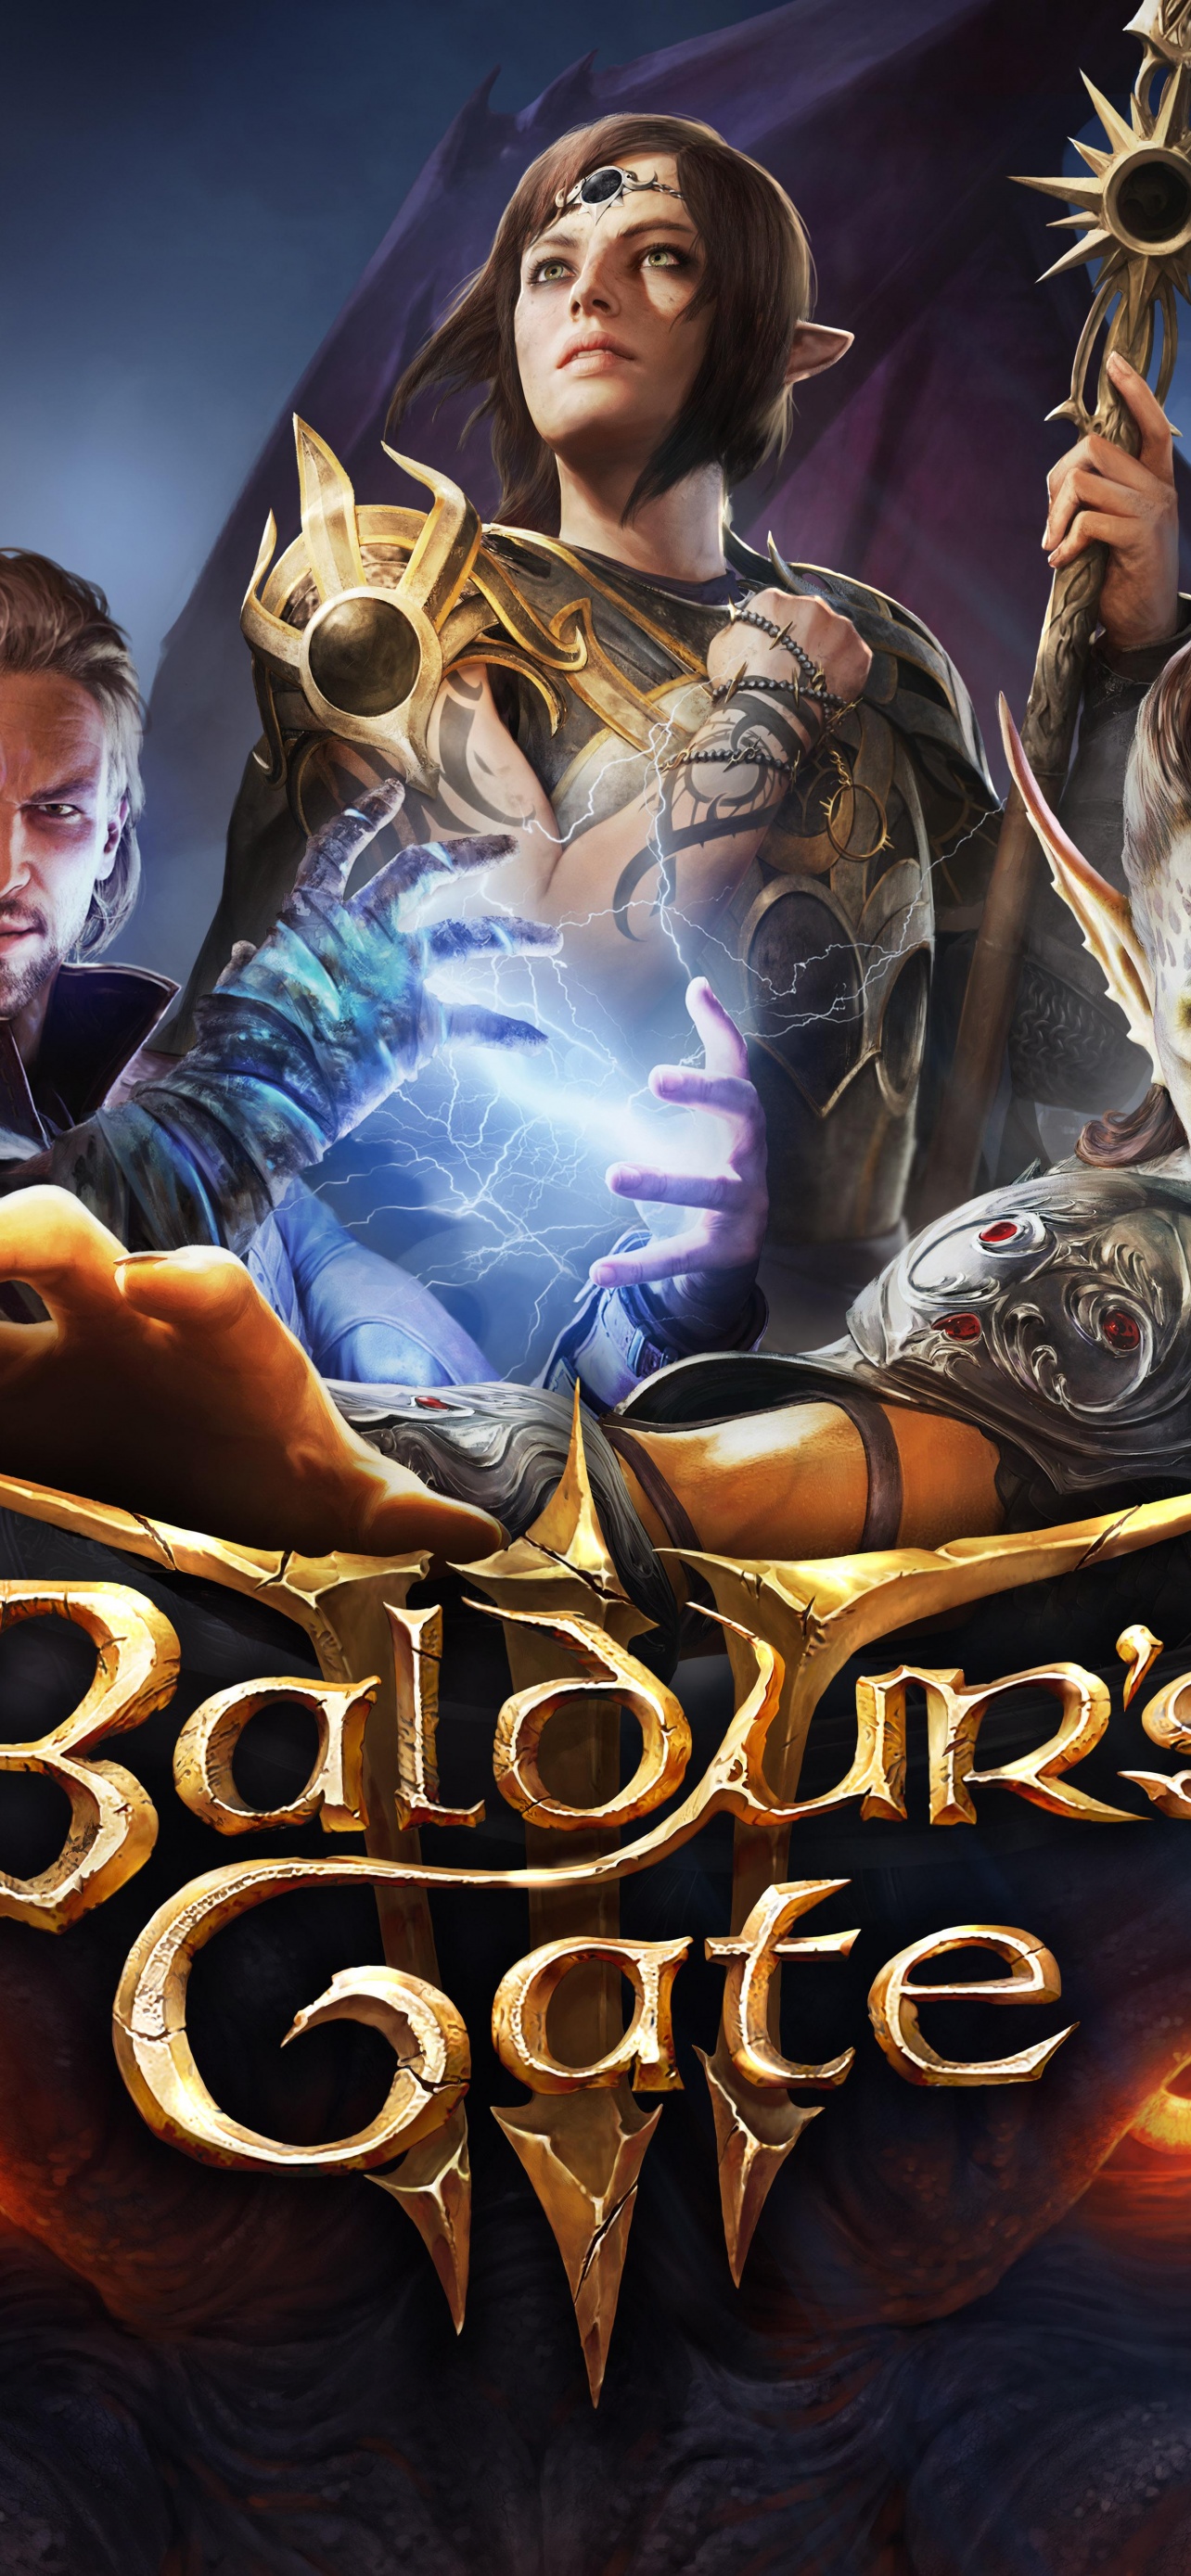 Baldur's Gate 3 Wallpaper 4K, PC Games, PlayStation 5